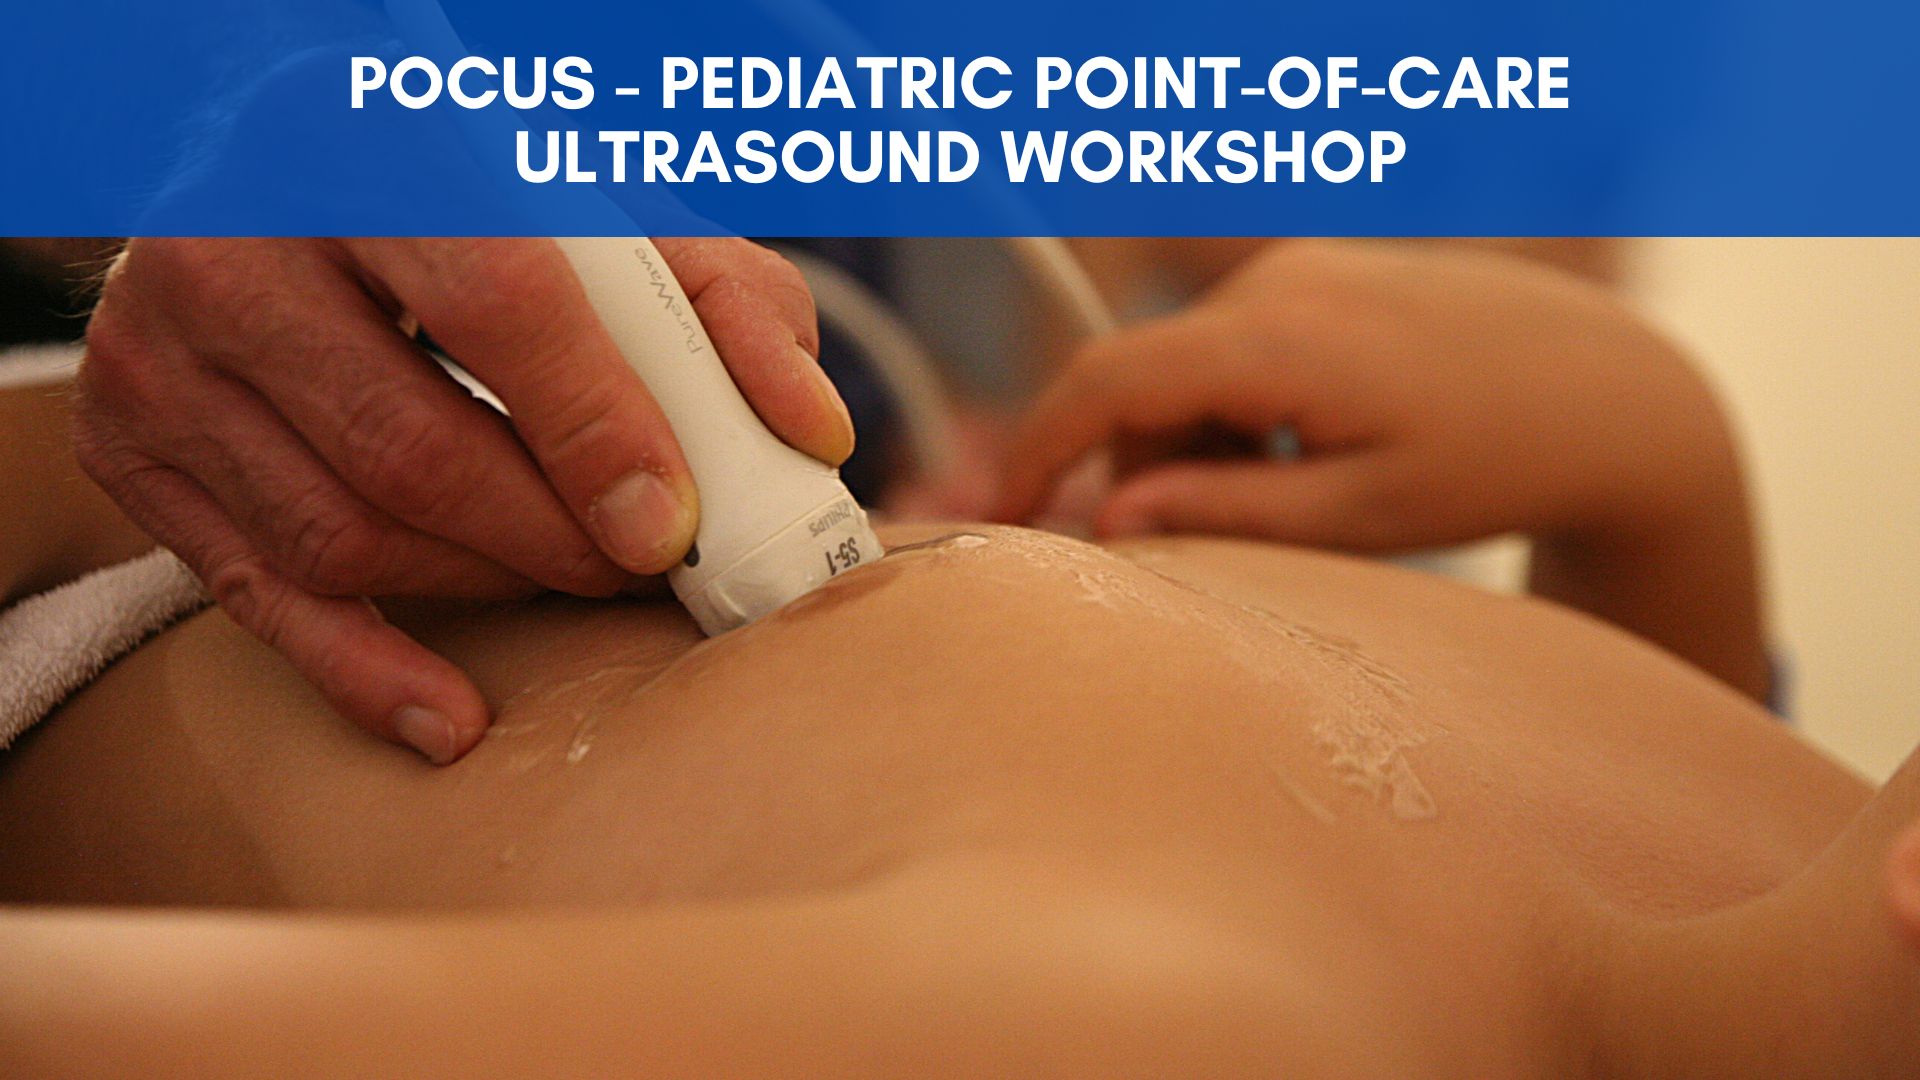 POCUS - Pediatric point-of-care ultrasound workshop